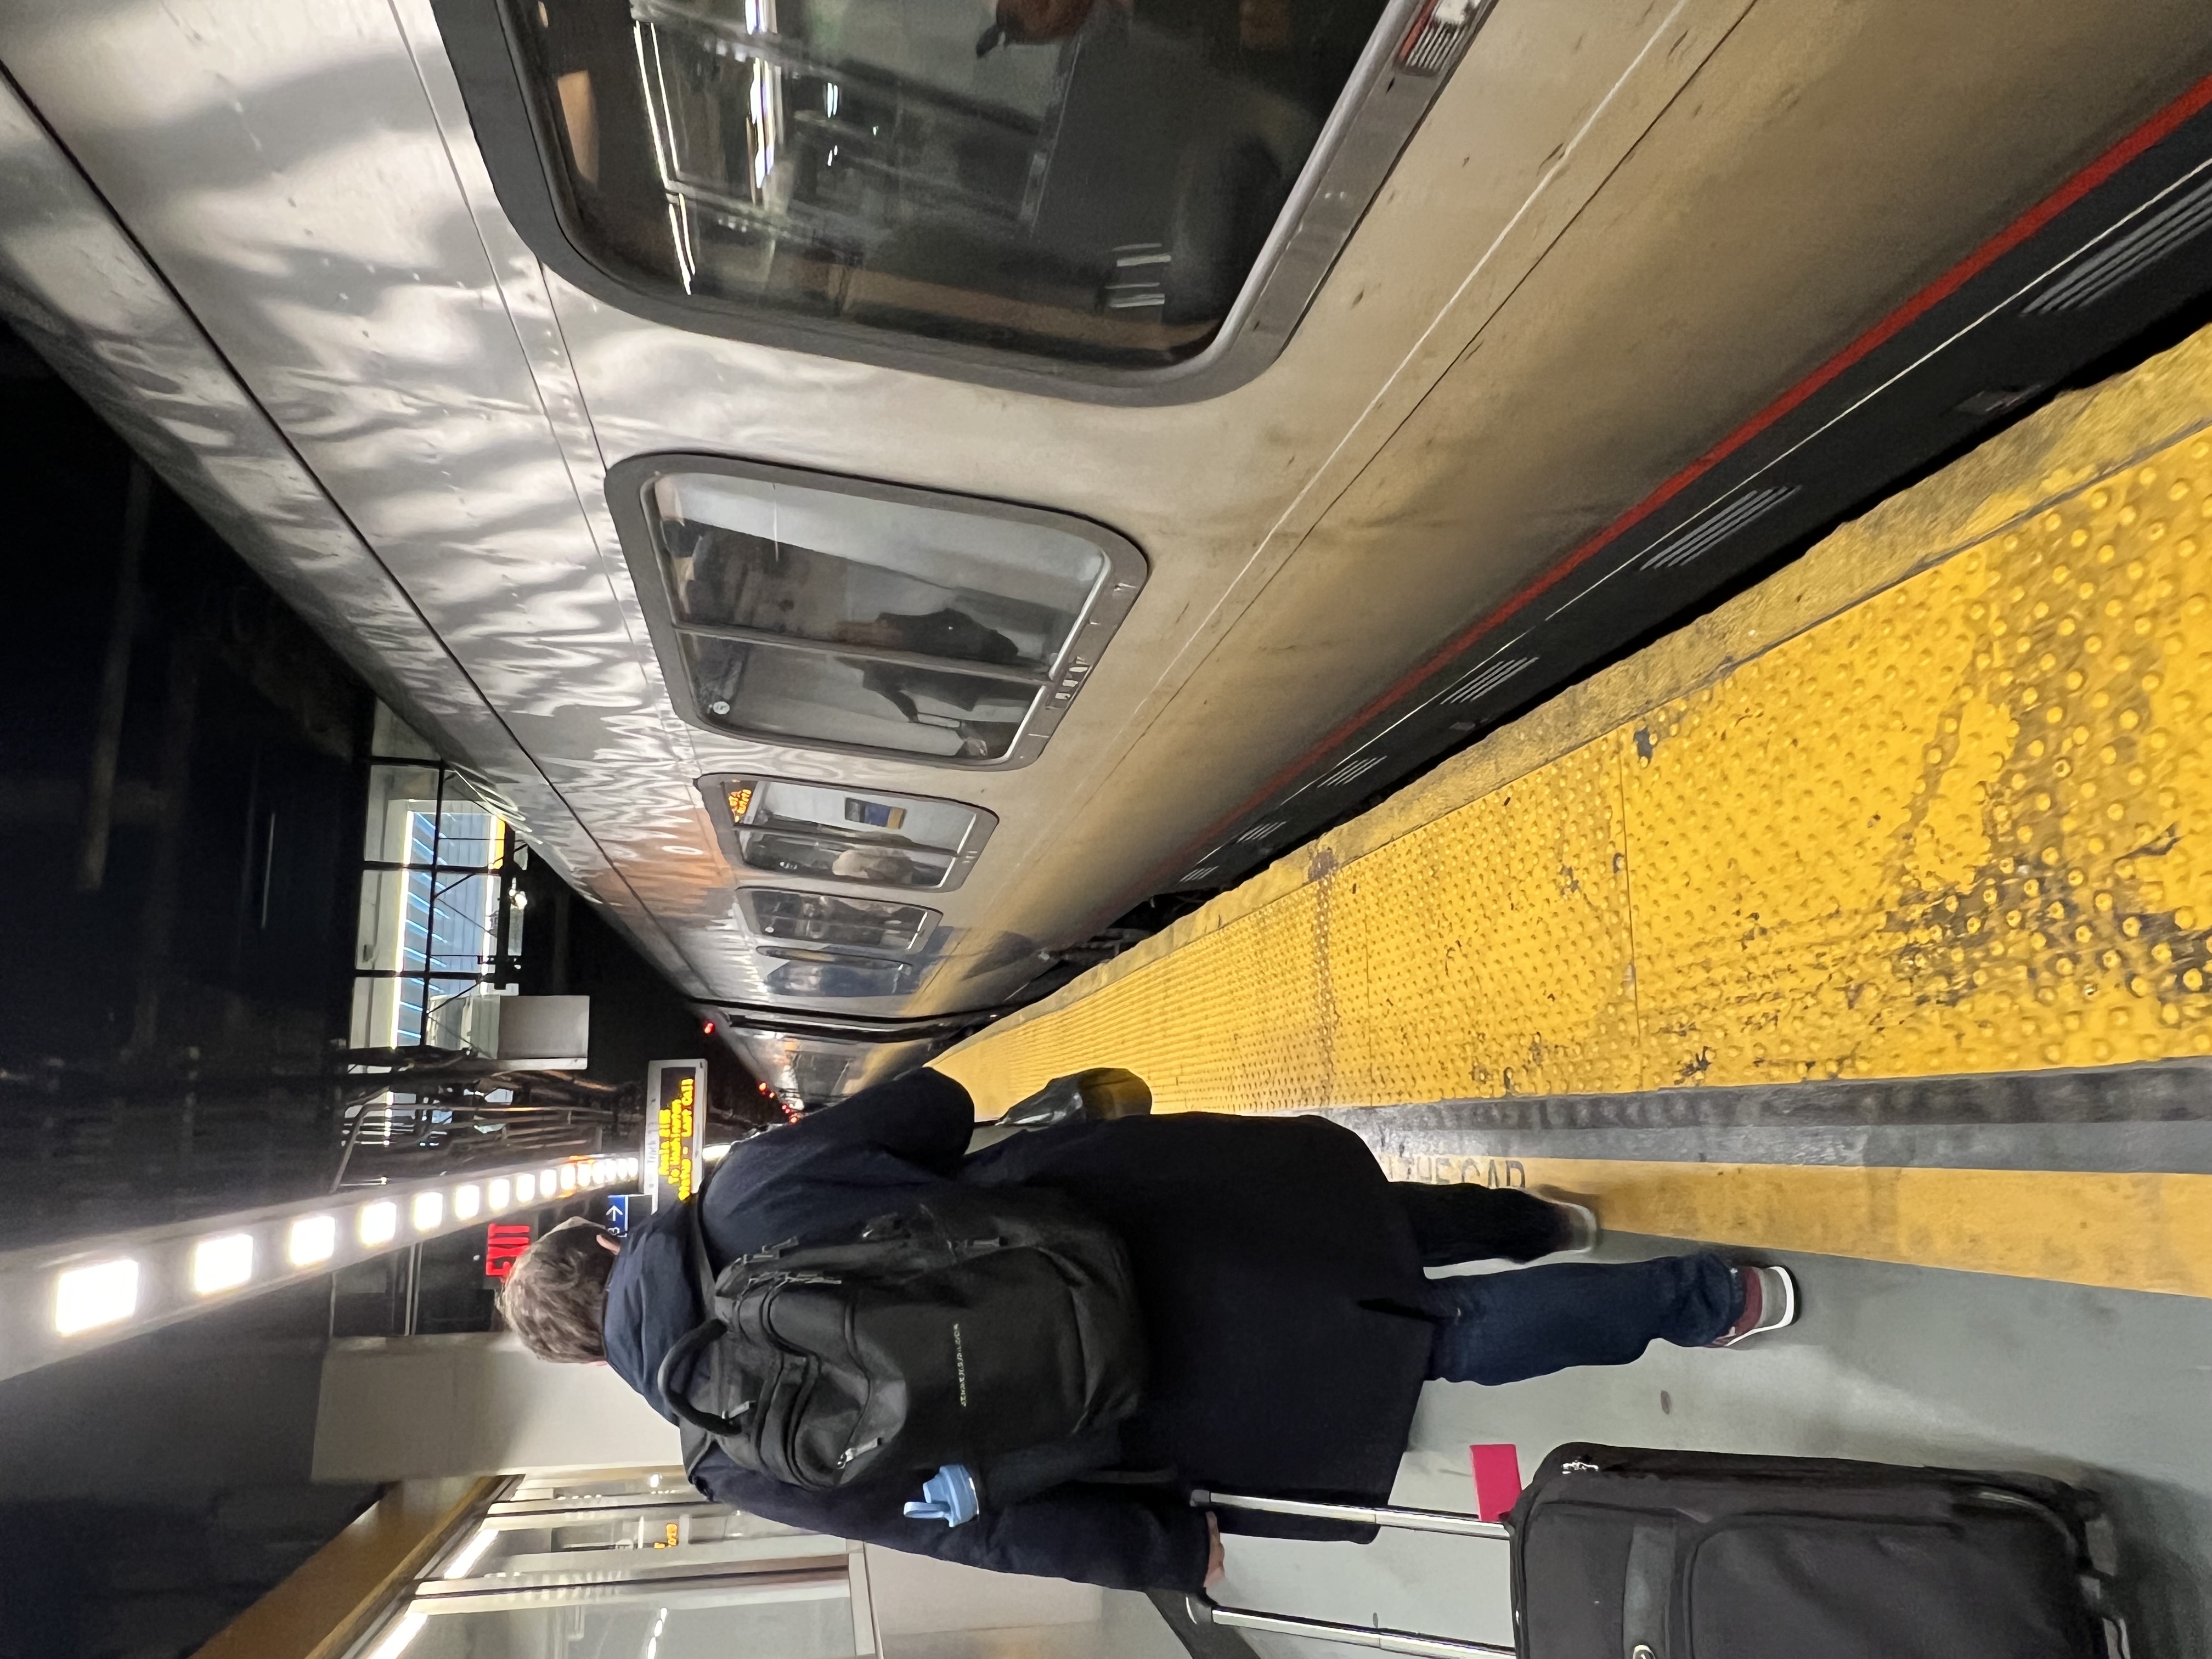 a person walking on a train platform